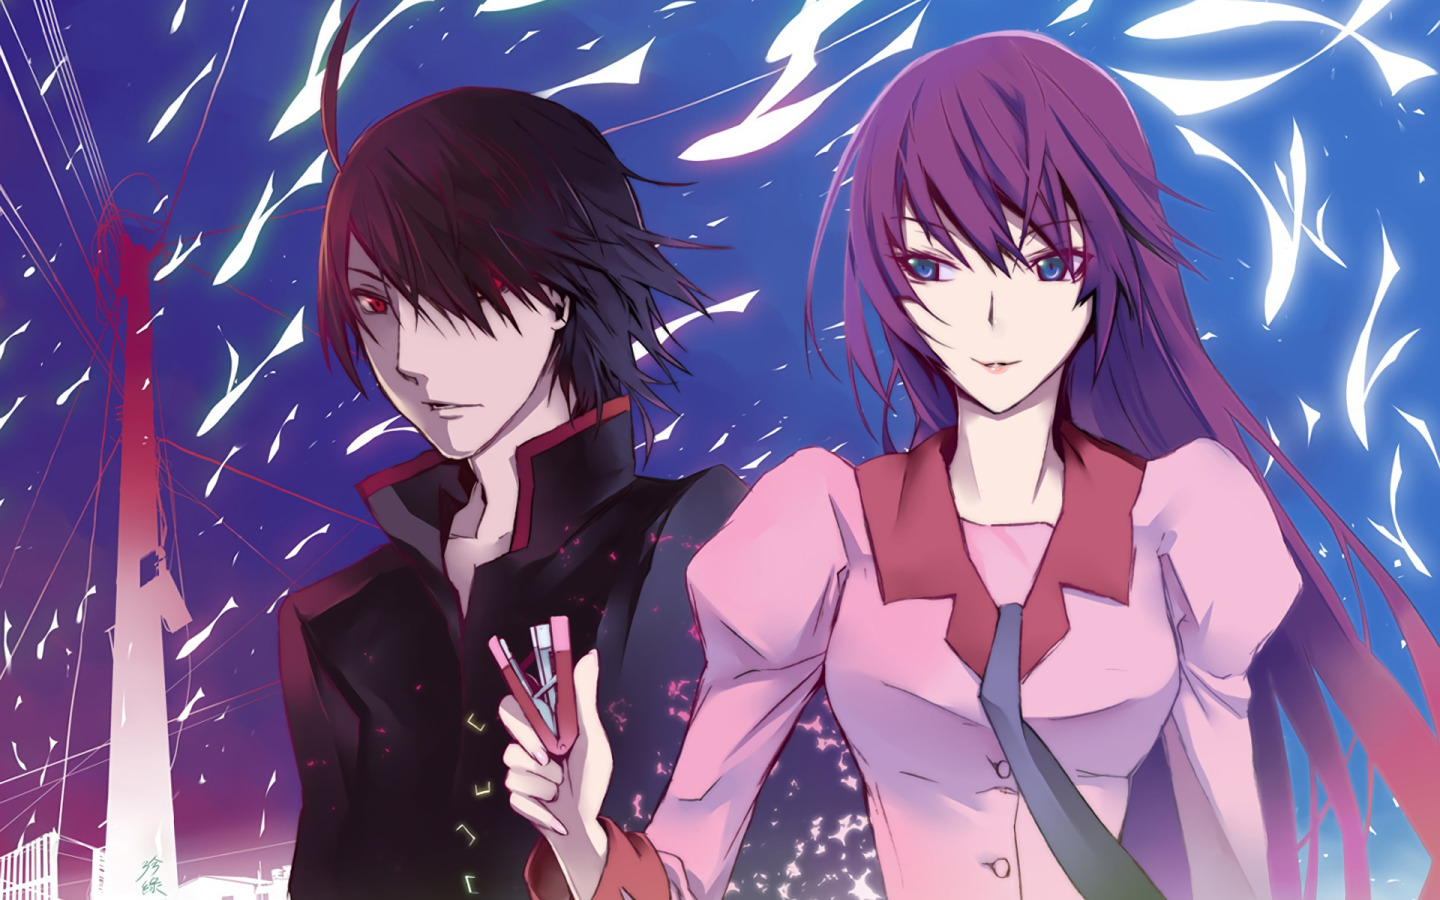 Massive Supernatural Light Novel Series Returns With New Anime Adaptation